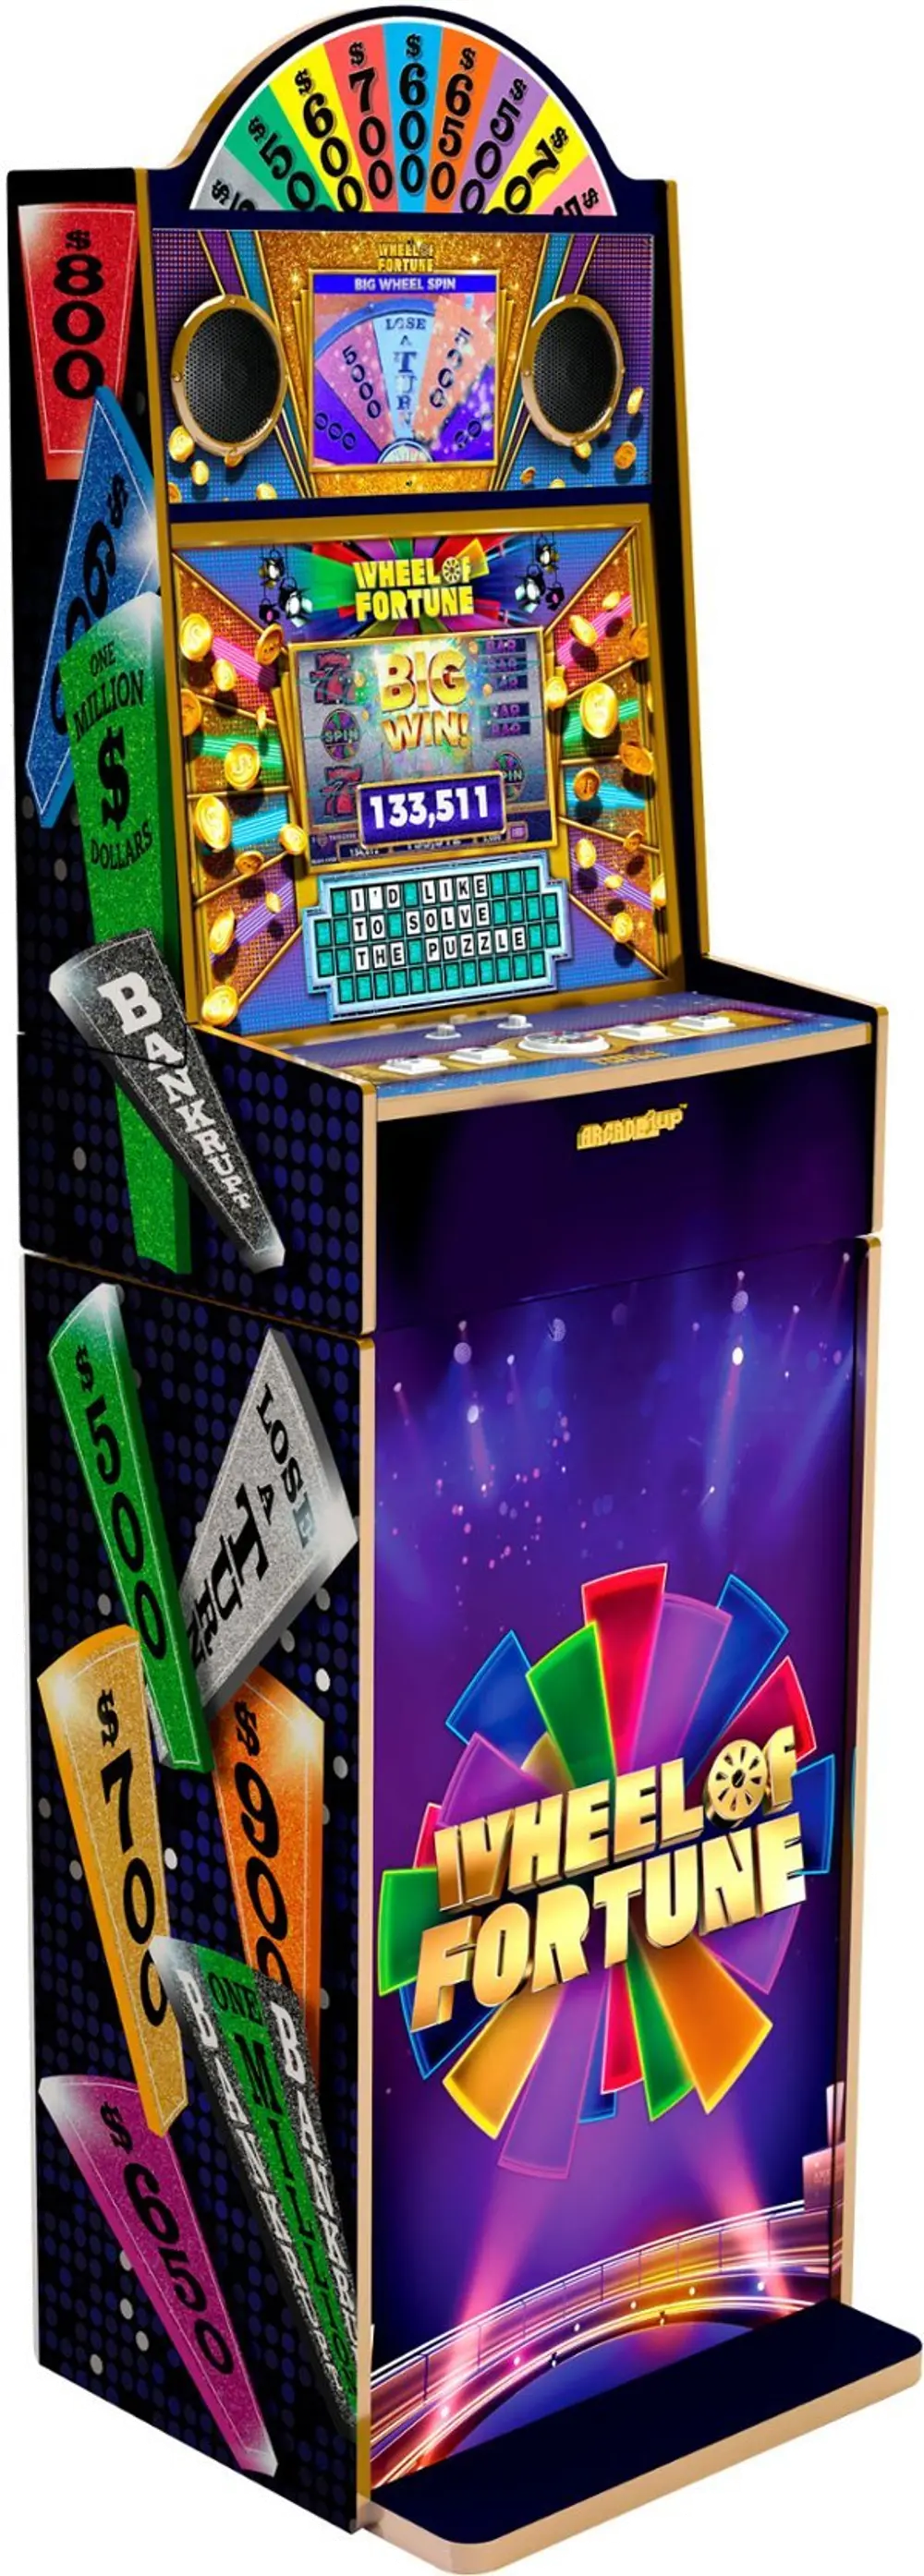 UPRIGHT/WHEEL_FRTUNE Arcade1Up Wheel of Fortune Casinocade Deluxe Arcade Game-1